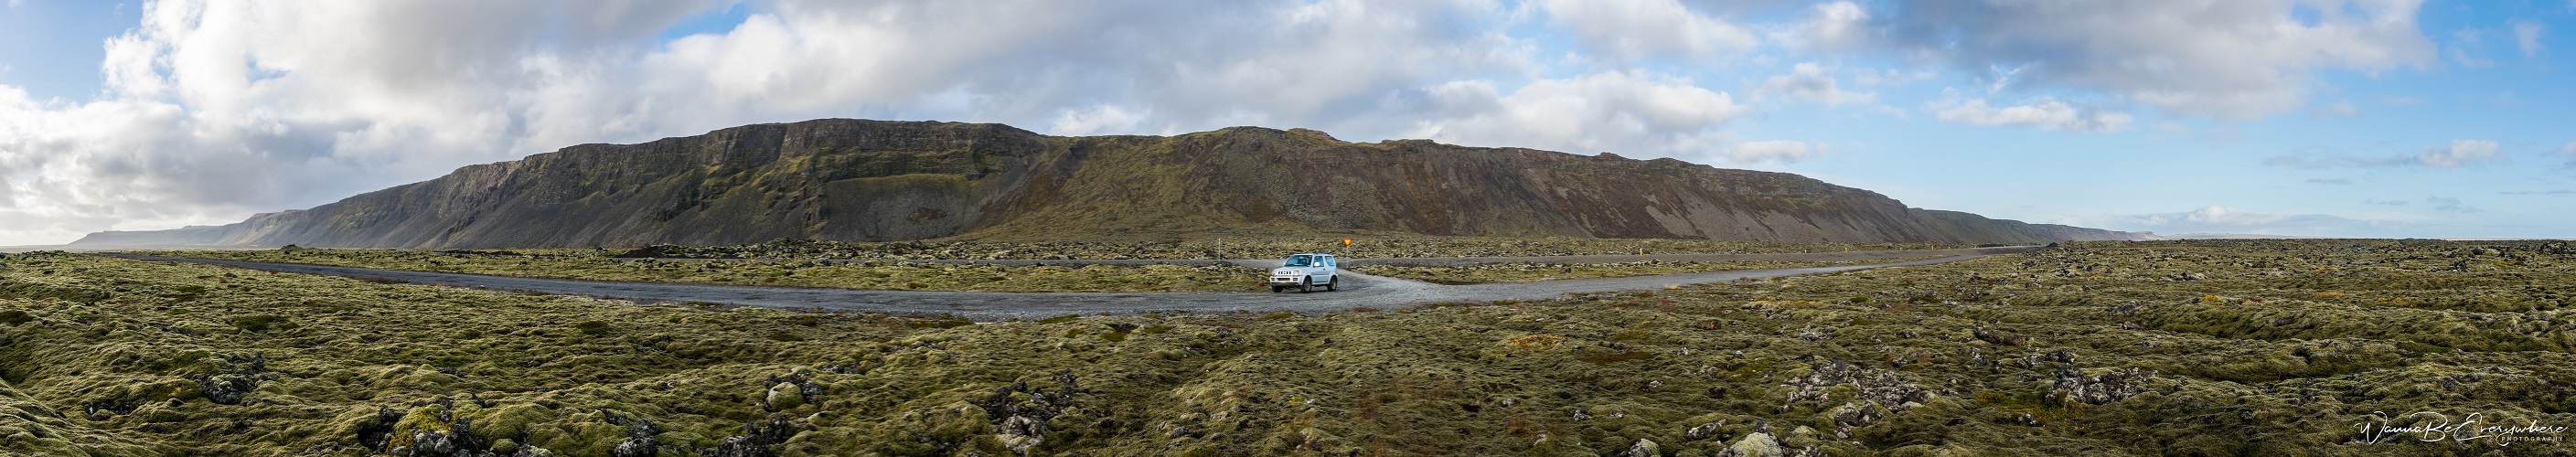 Driving through Iceland